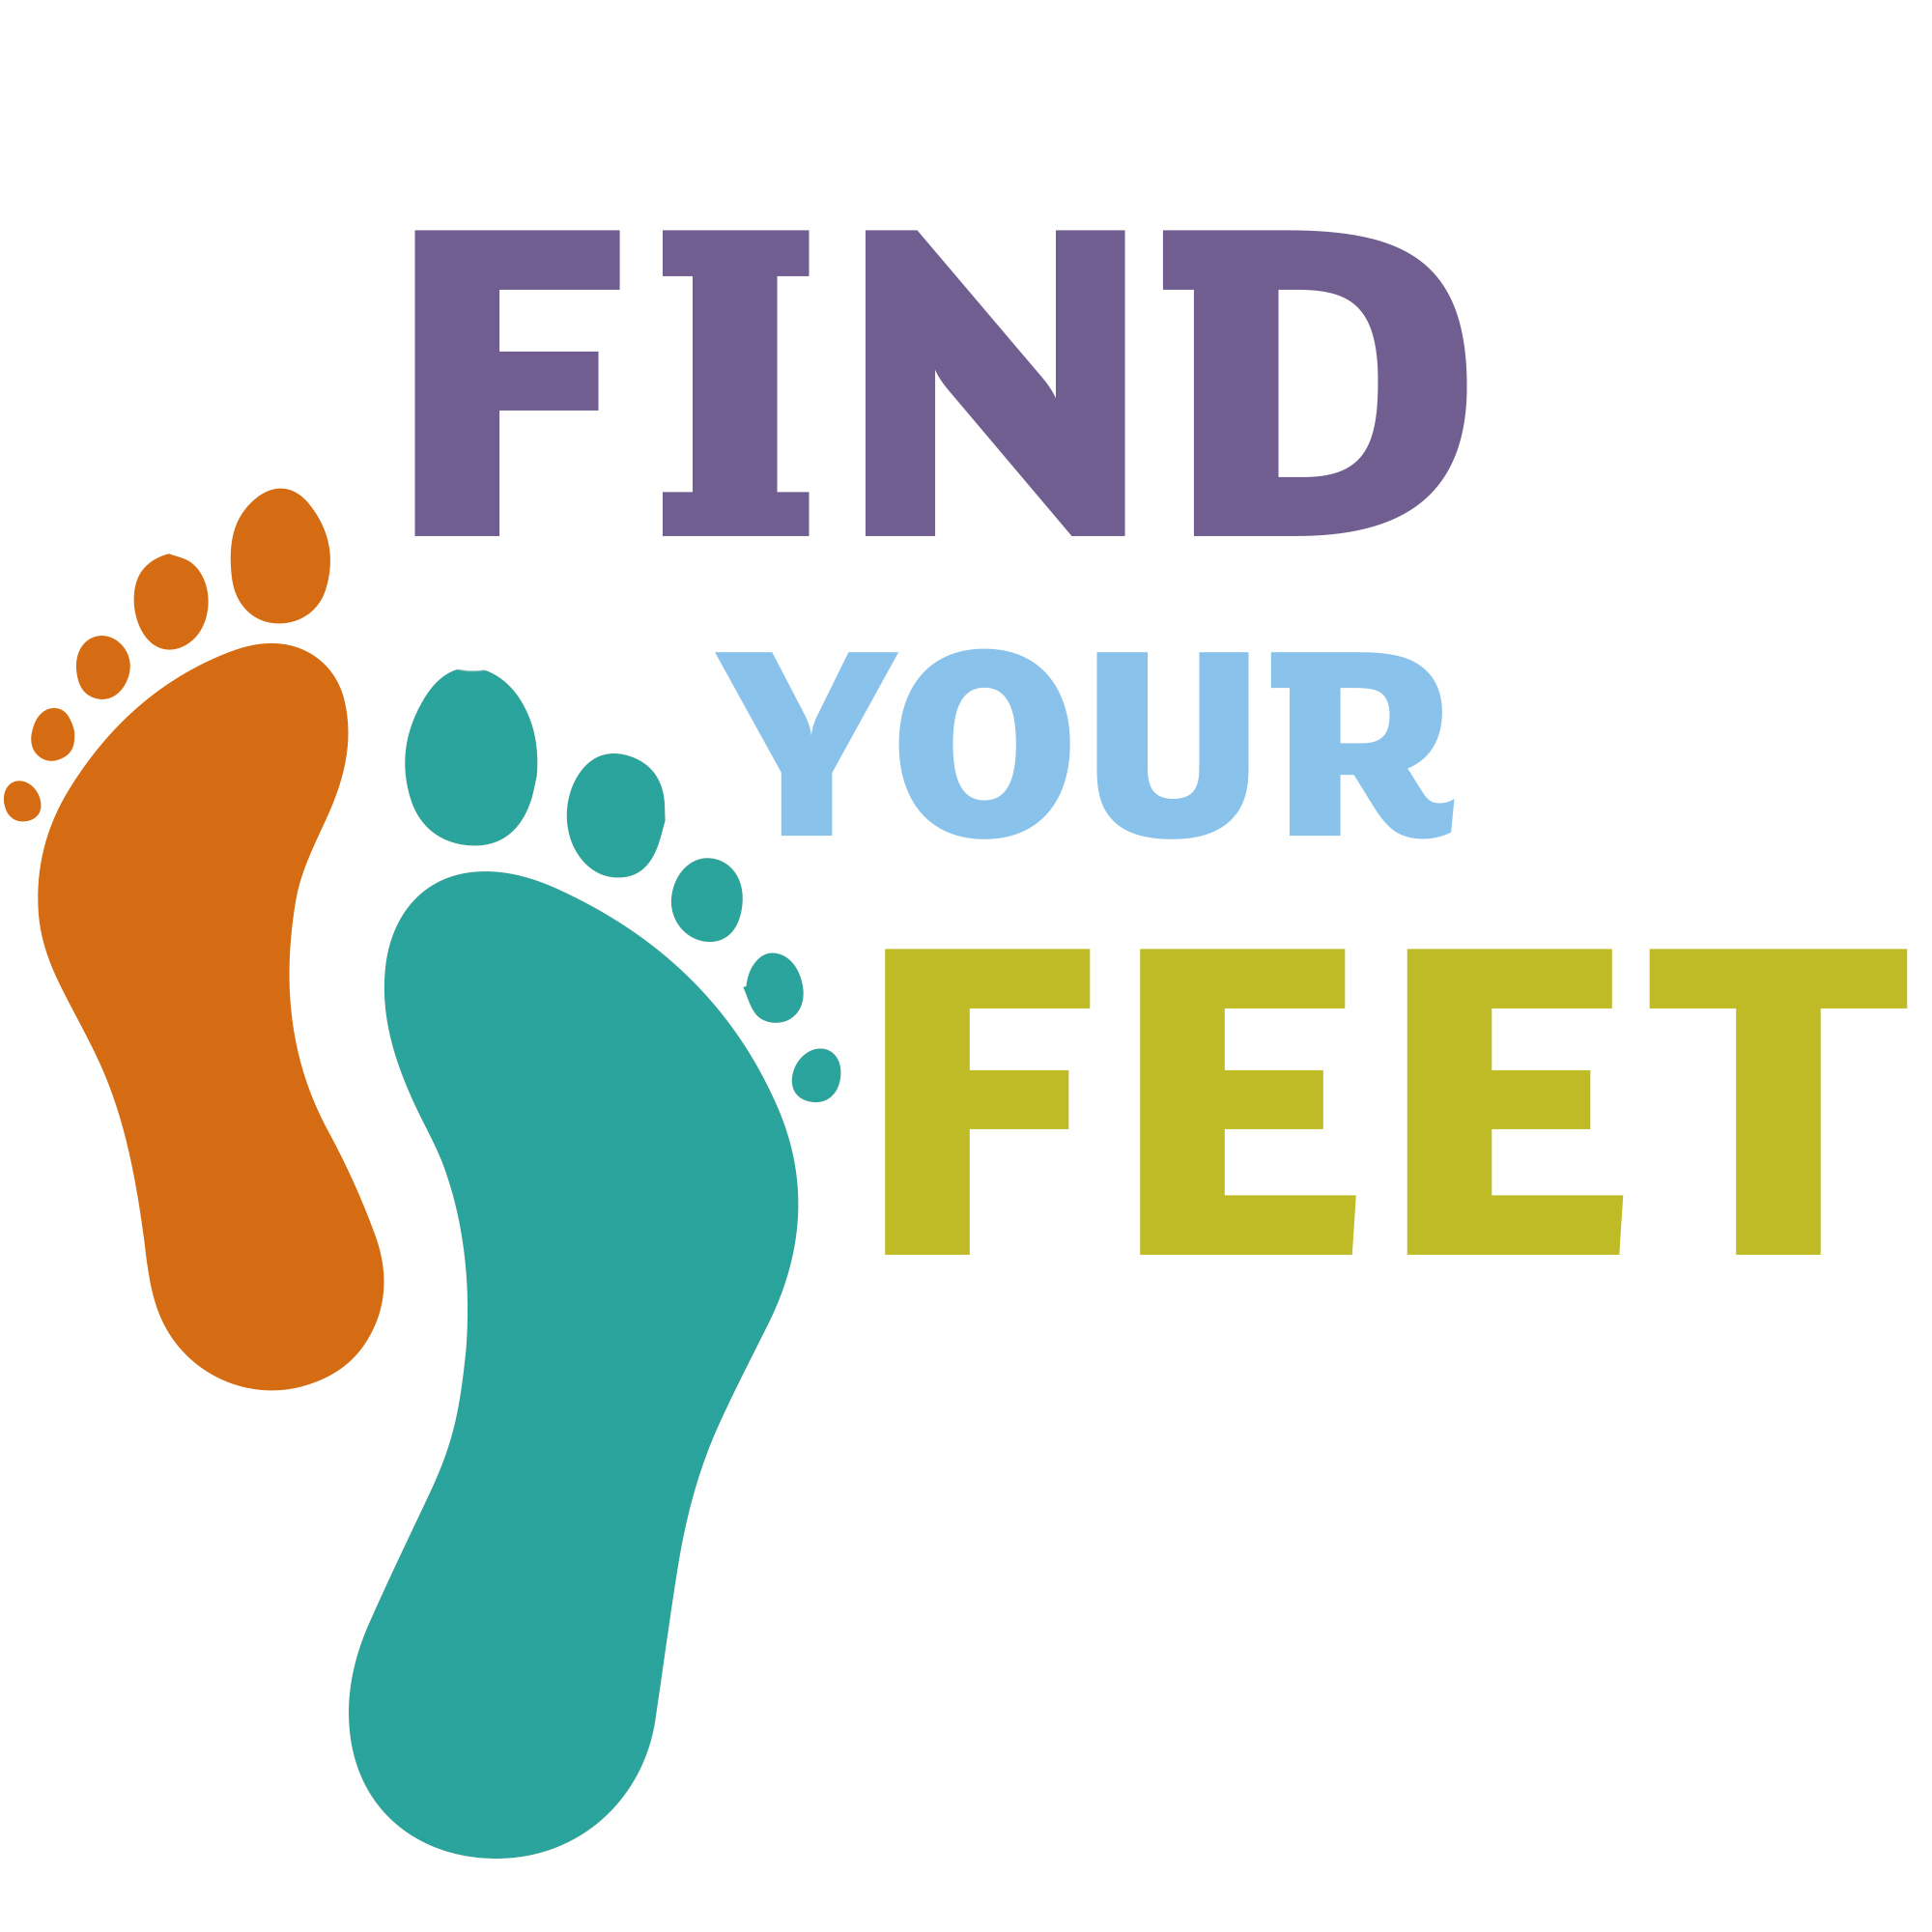 Foot по английски. Find your feet. Find your feet idiom. Keep your feet on the ground идиома.